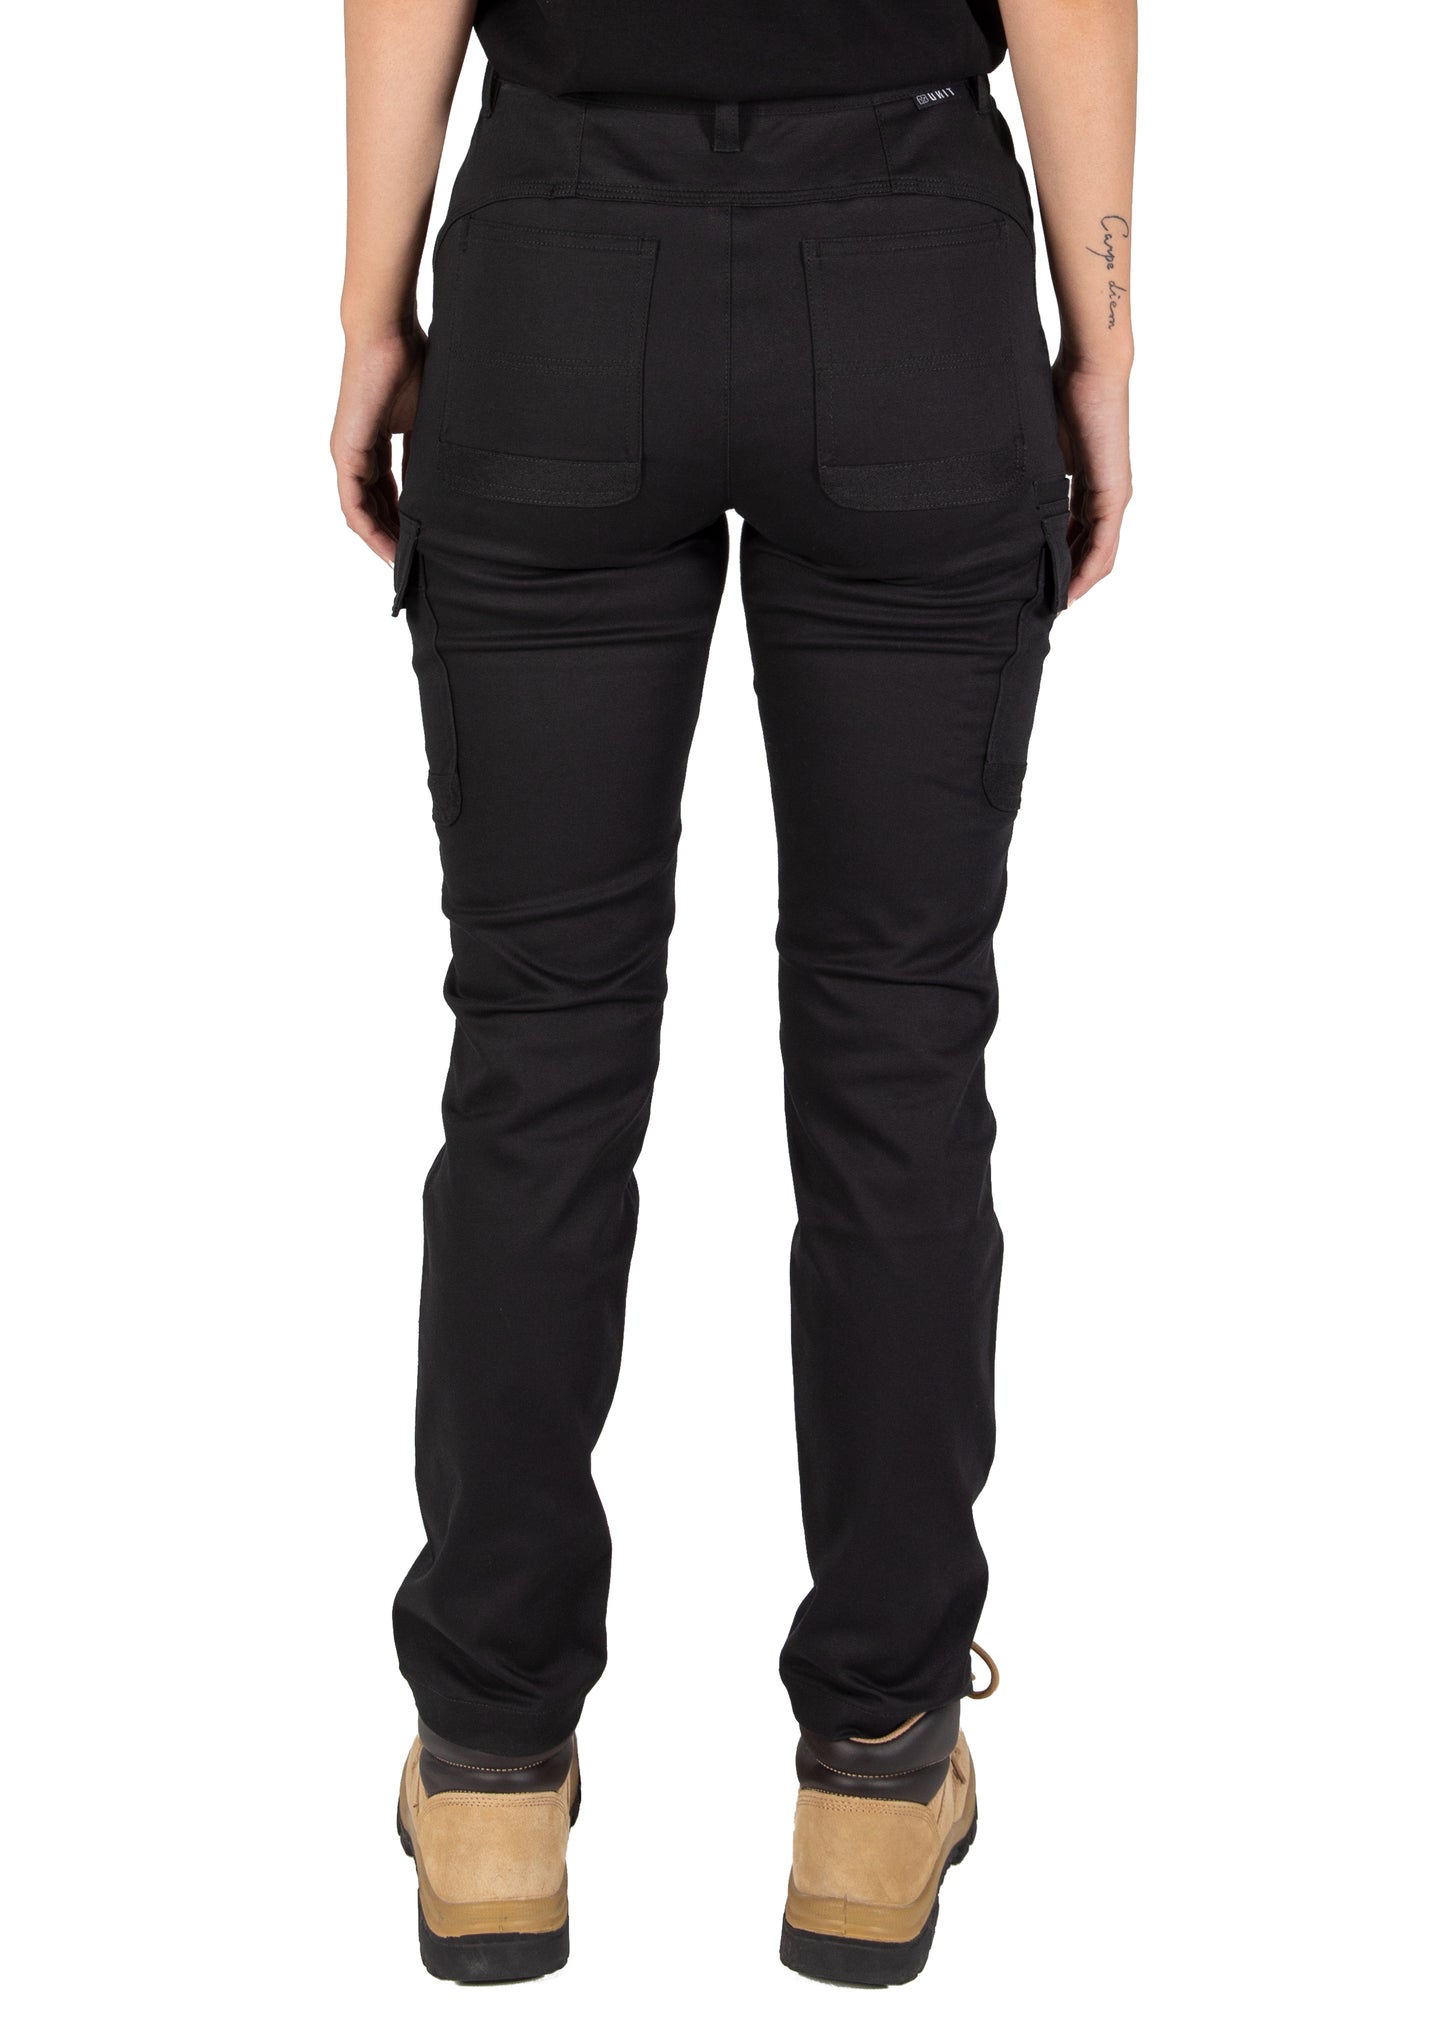 Unit Ladies Workwear Pant - Cargo - Staple